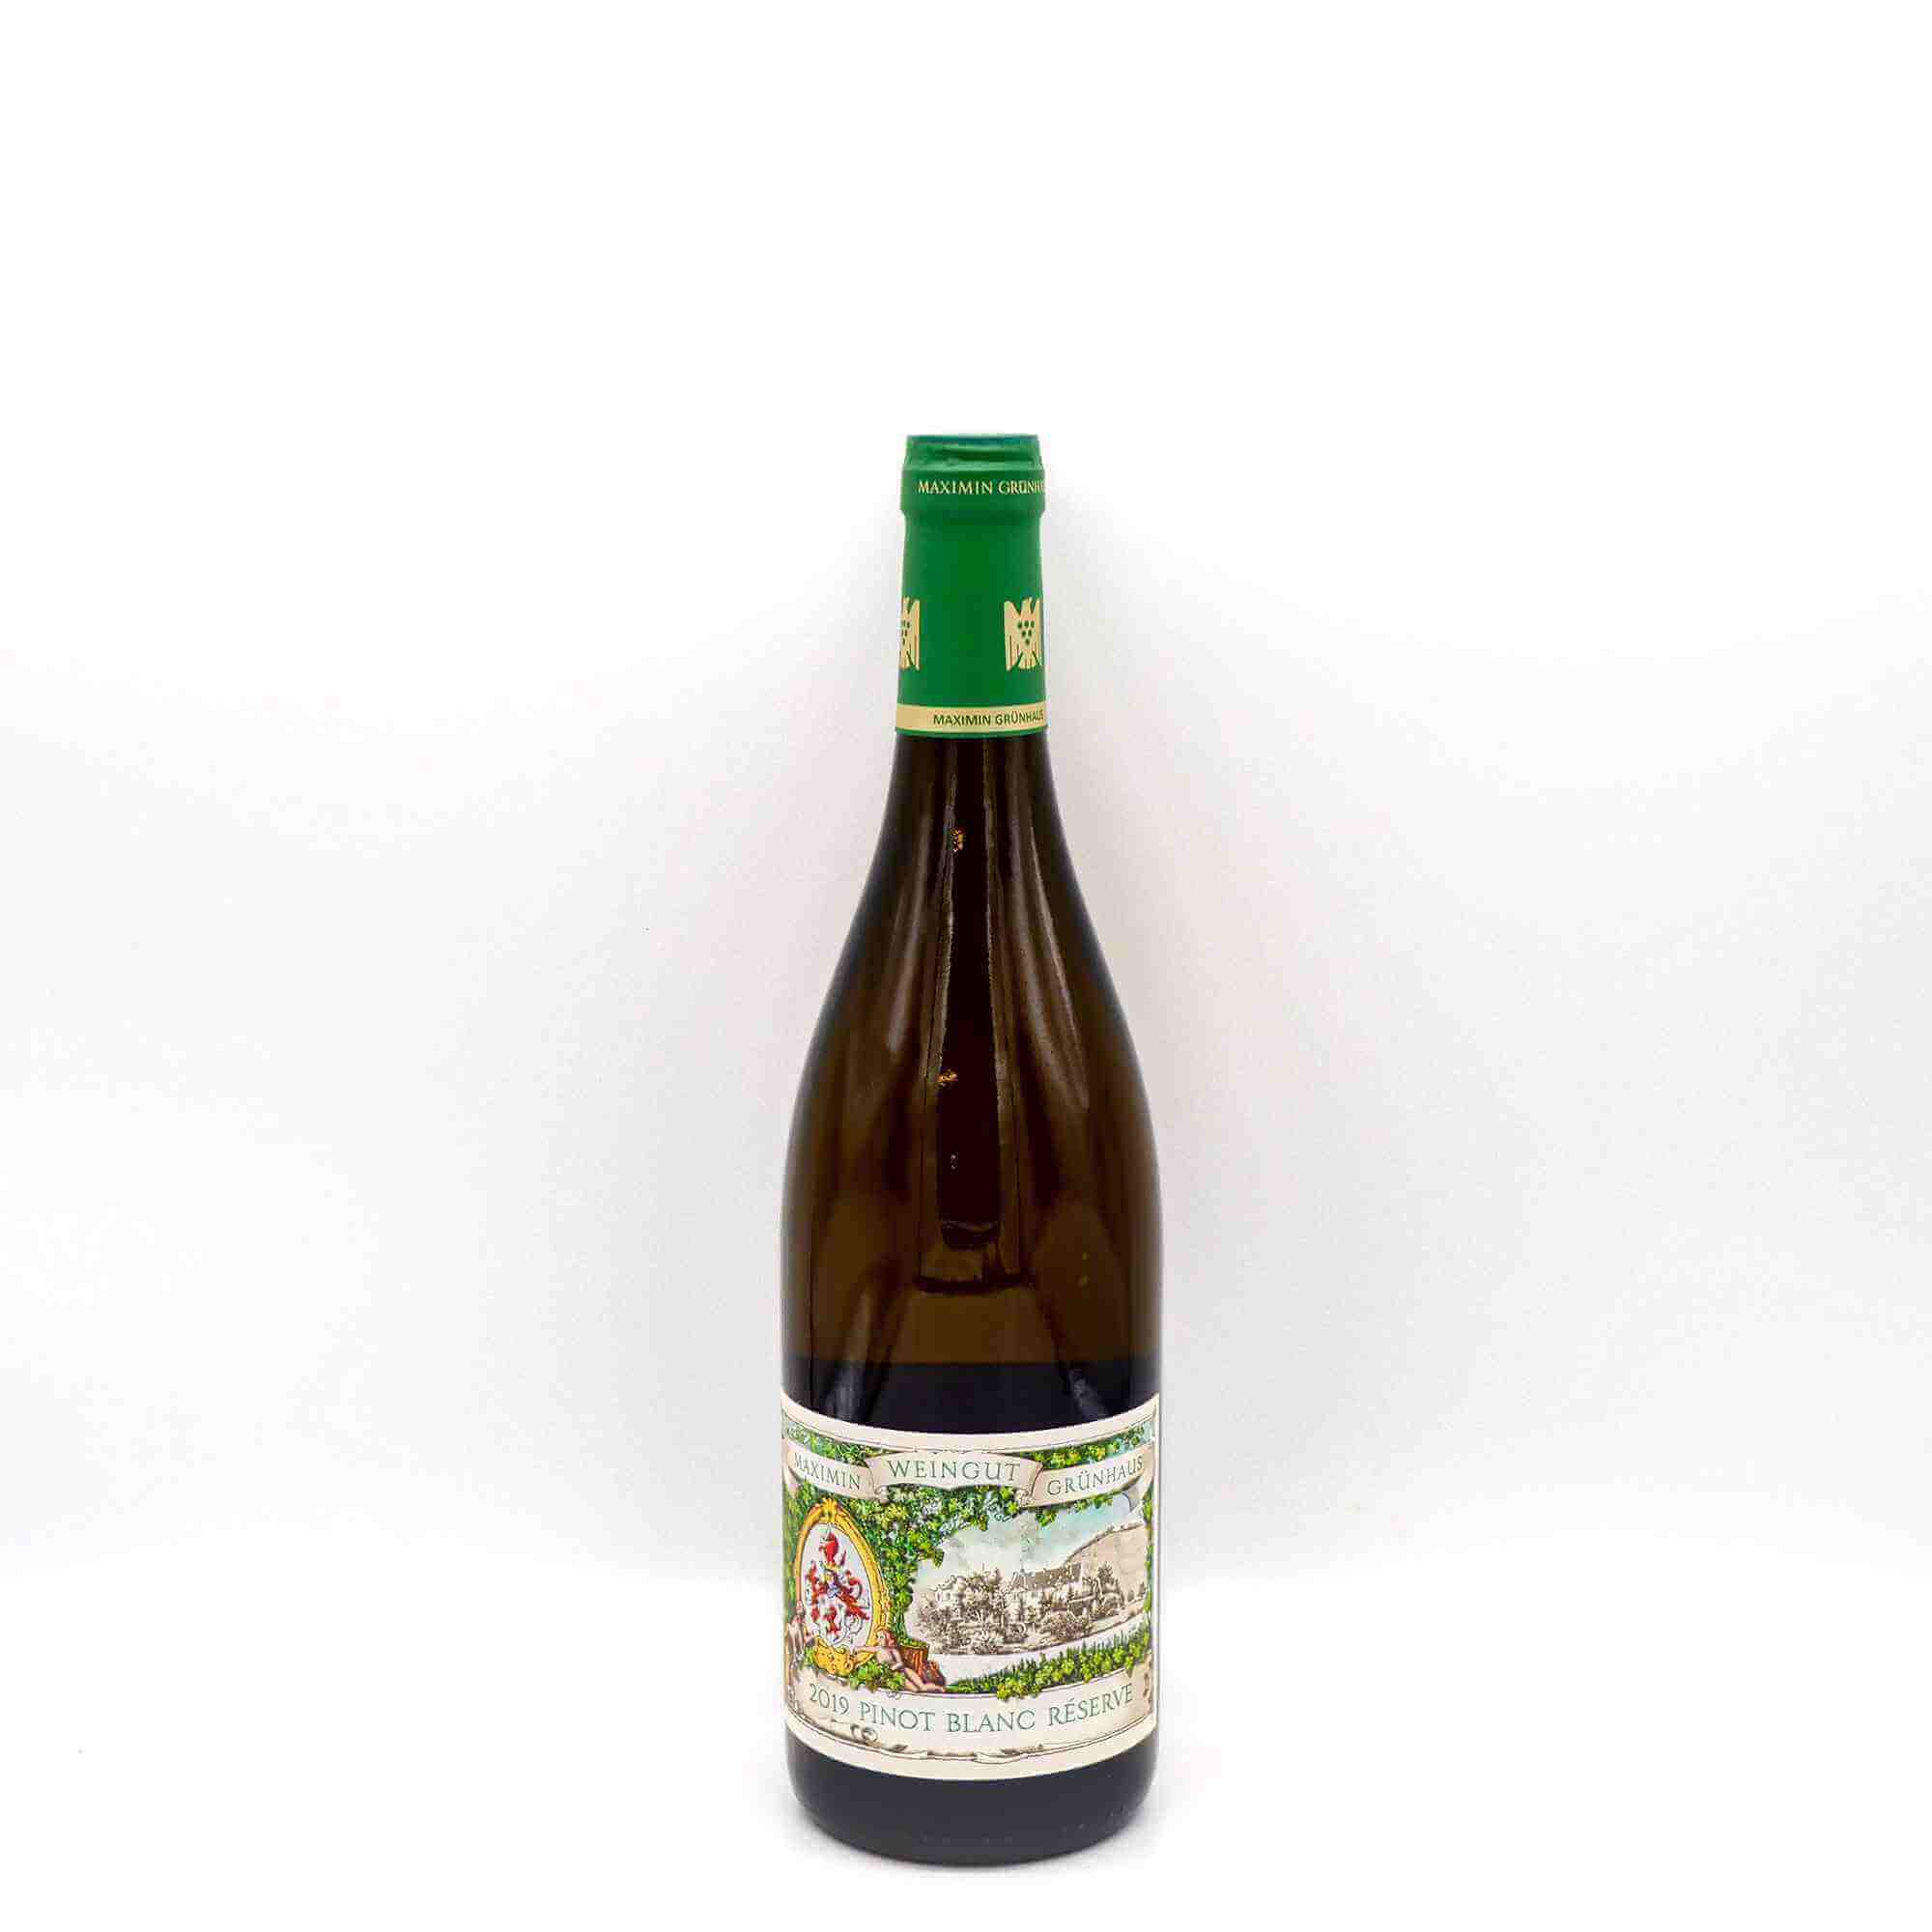 Grünhaus Pinot Blanc Reserve 2019